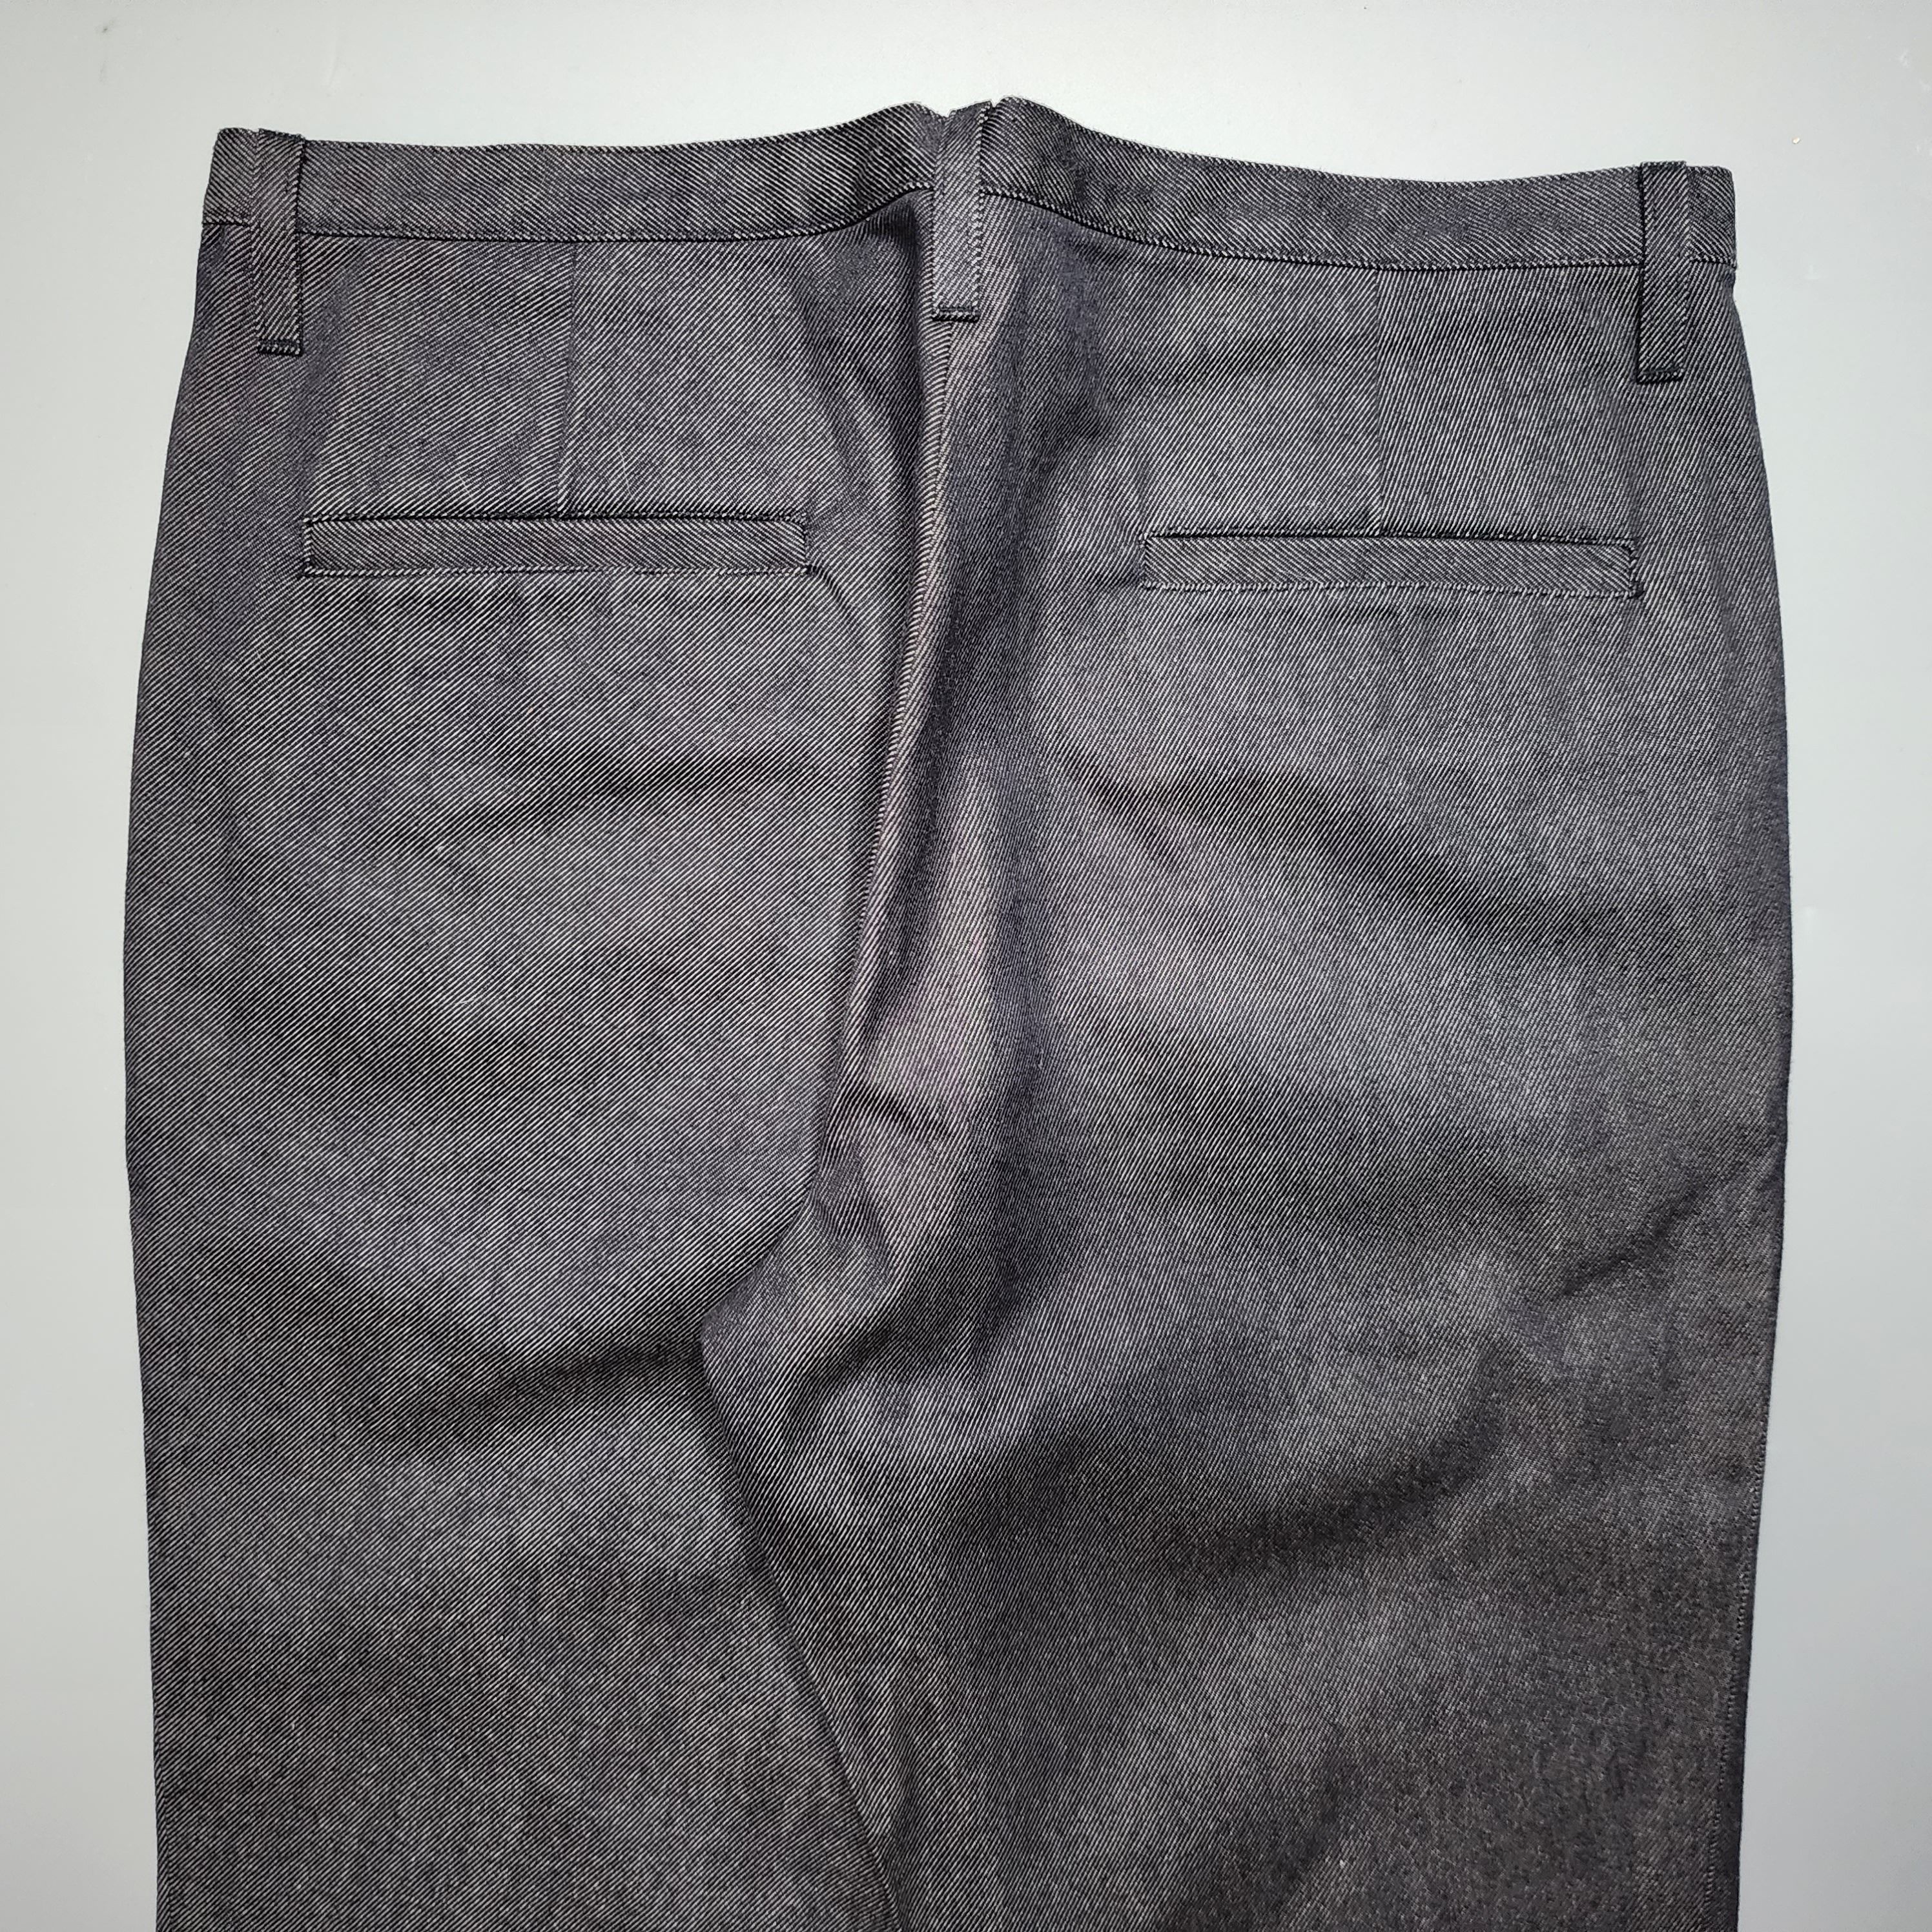 Miu Miu - FW99 Convertible Bottom Flared Jeans - 4